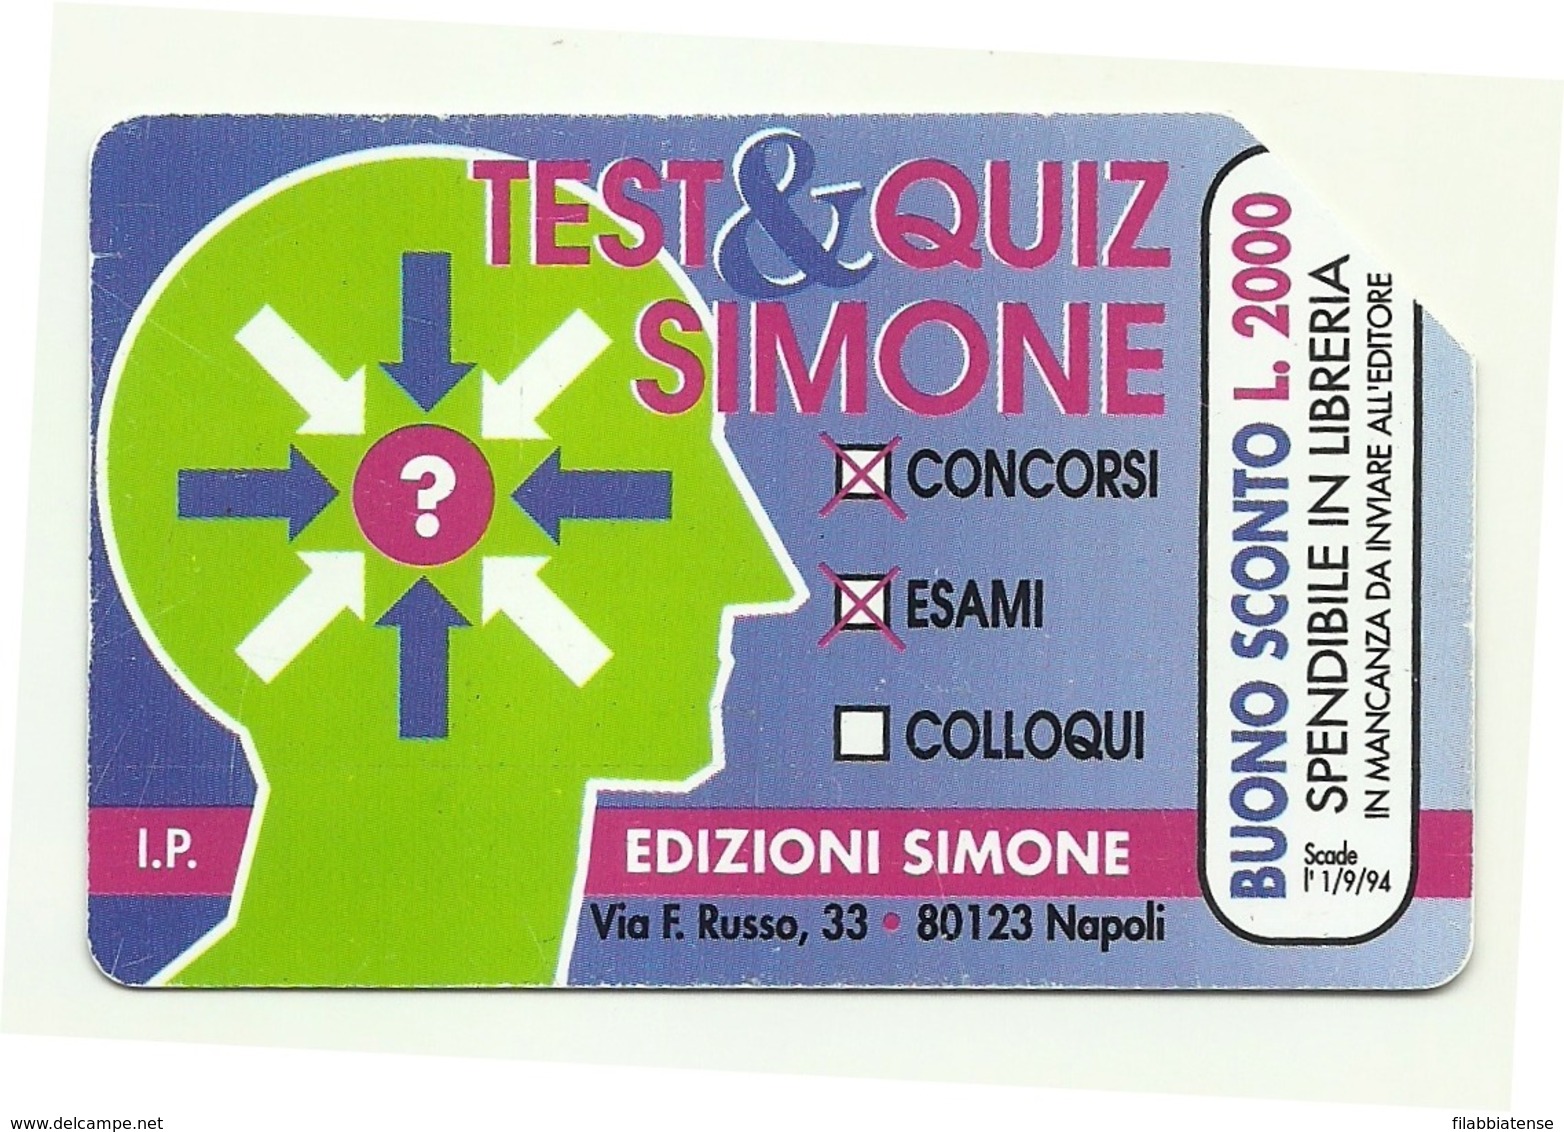 Italia - Tessera Telefonica Da 10.000 Lire N. 290 - 31/12/95 Dizionari Simone - Publiques Figurées Ordinaires